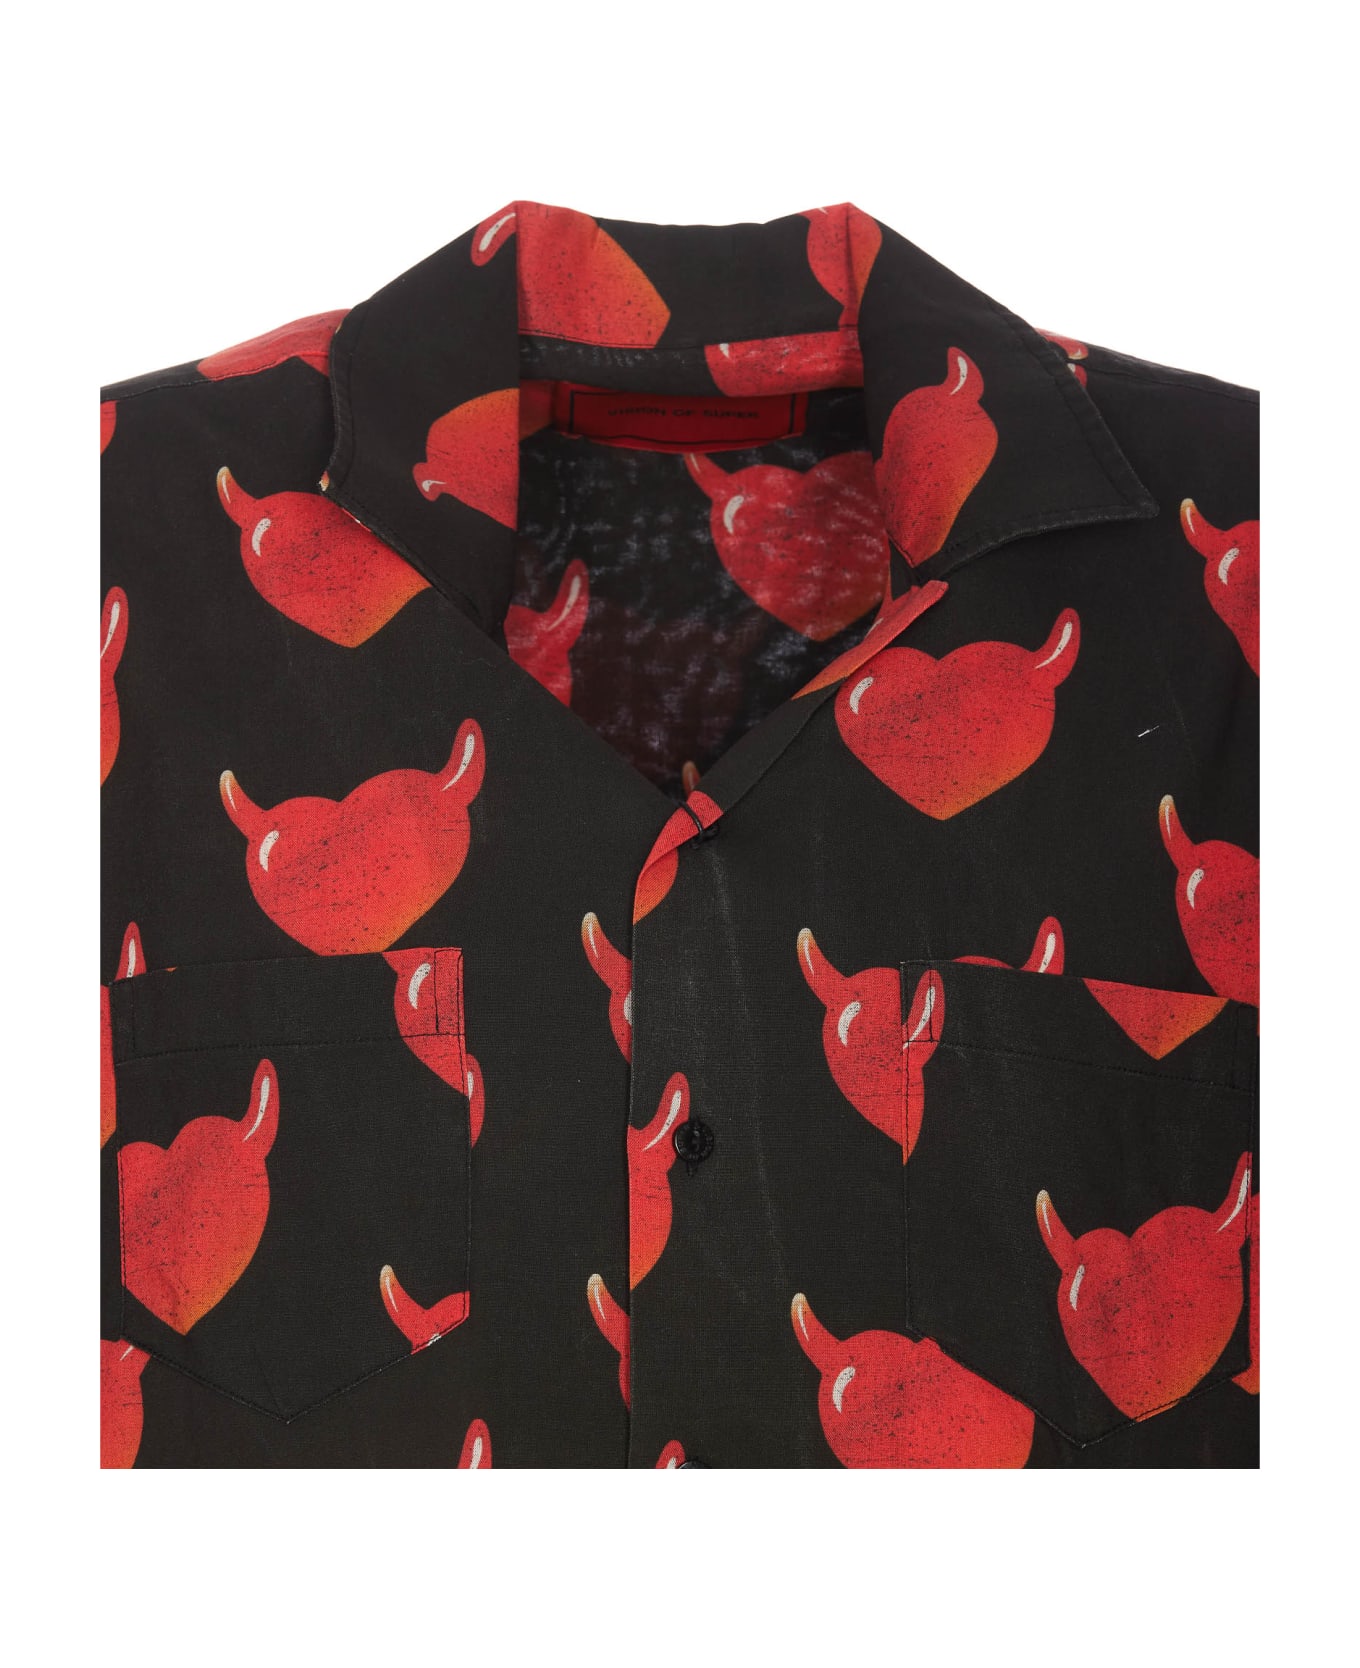 Vision of Super Vos Hearts Shirt - BLACK/RED